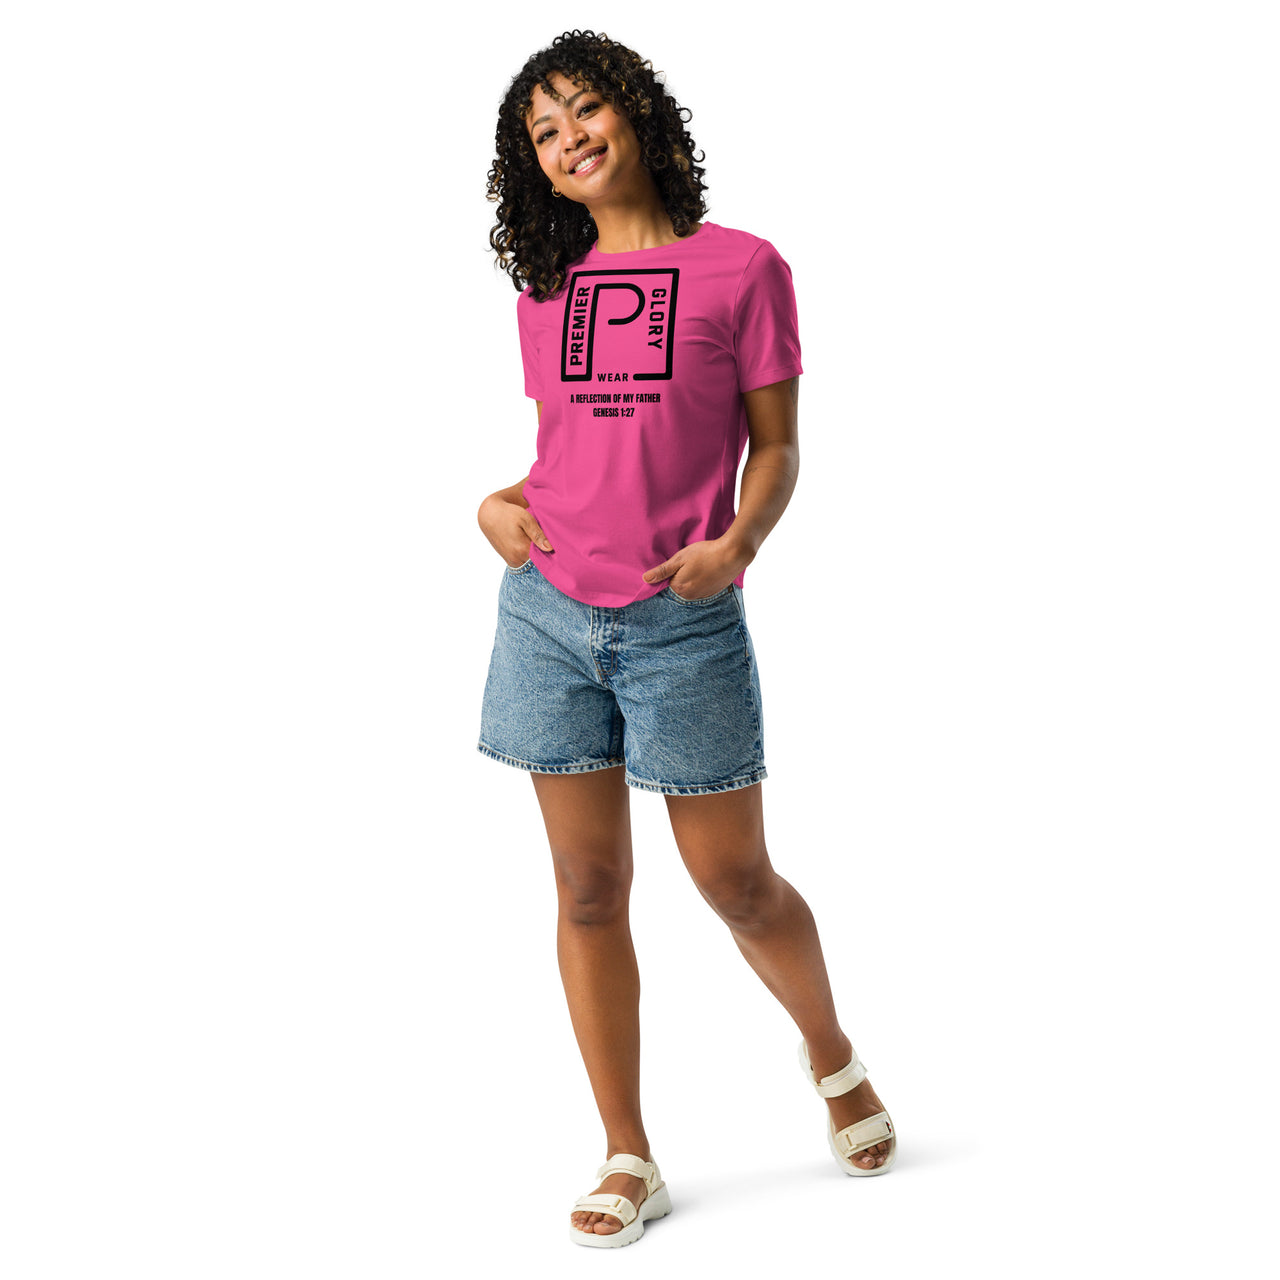 Premier Glory Wear (Multi-Colors) Women's Relaxed T-Shirt